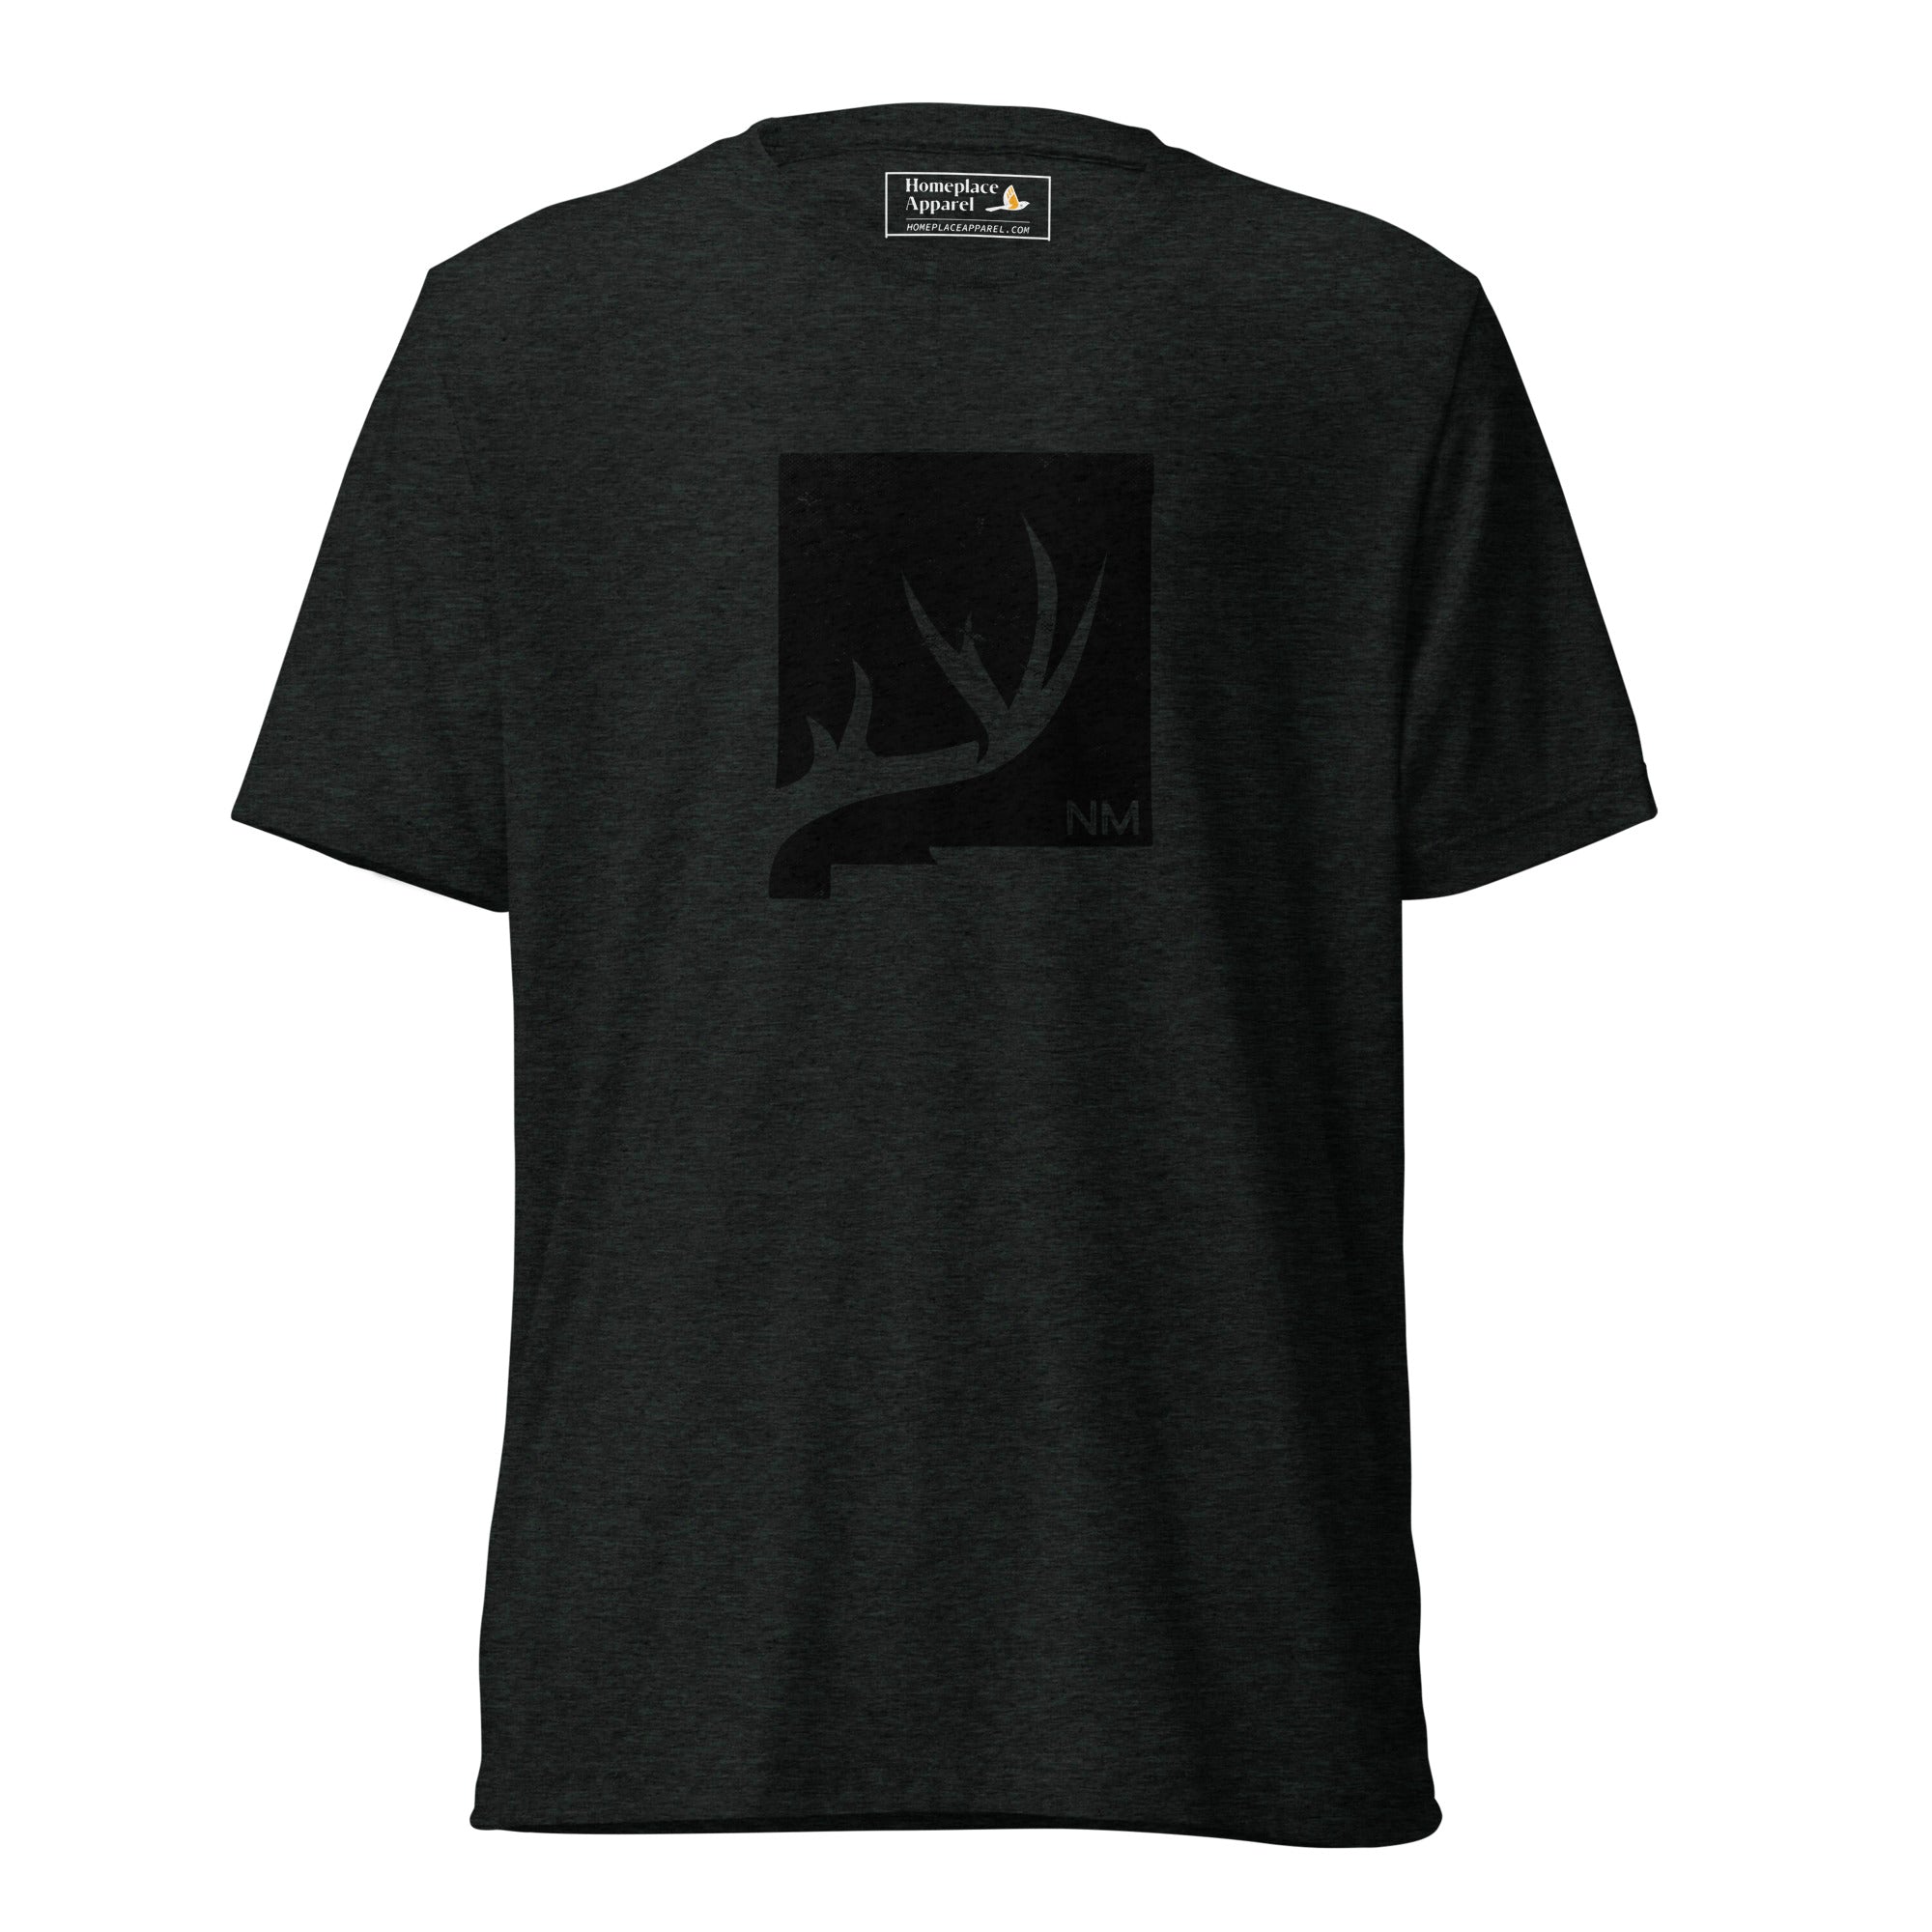 unisex-tri-blend-t-shirt-charcoal-black-triblend-front-650e39826ab09.jpg